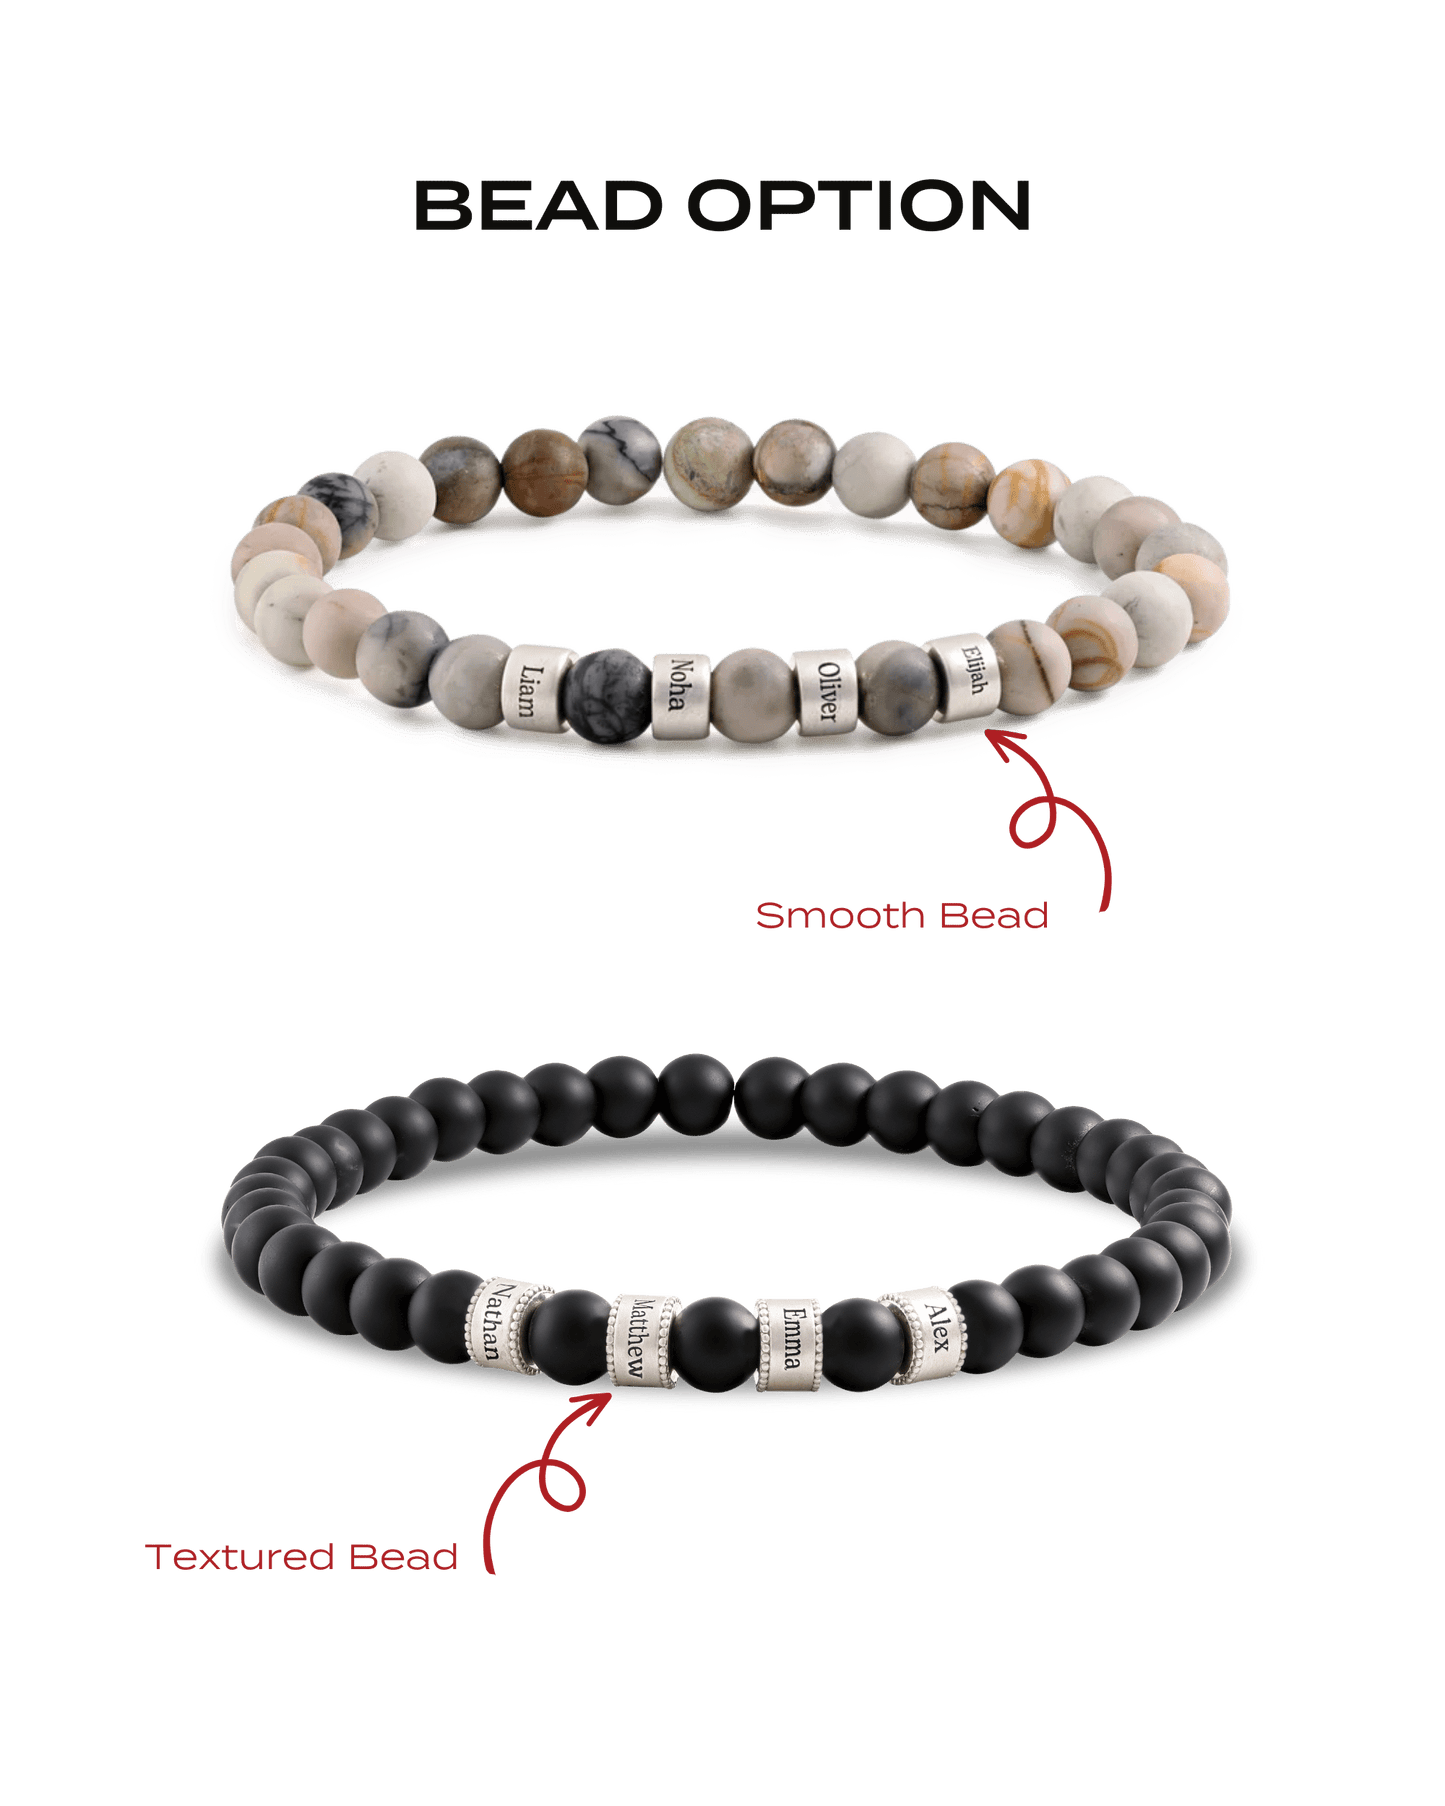 Dad's Legacy Beads Bracelet w/ Black Onyx Stones - 18K Gold Vermeil Bracelets magal-dev 